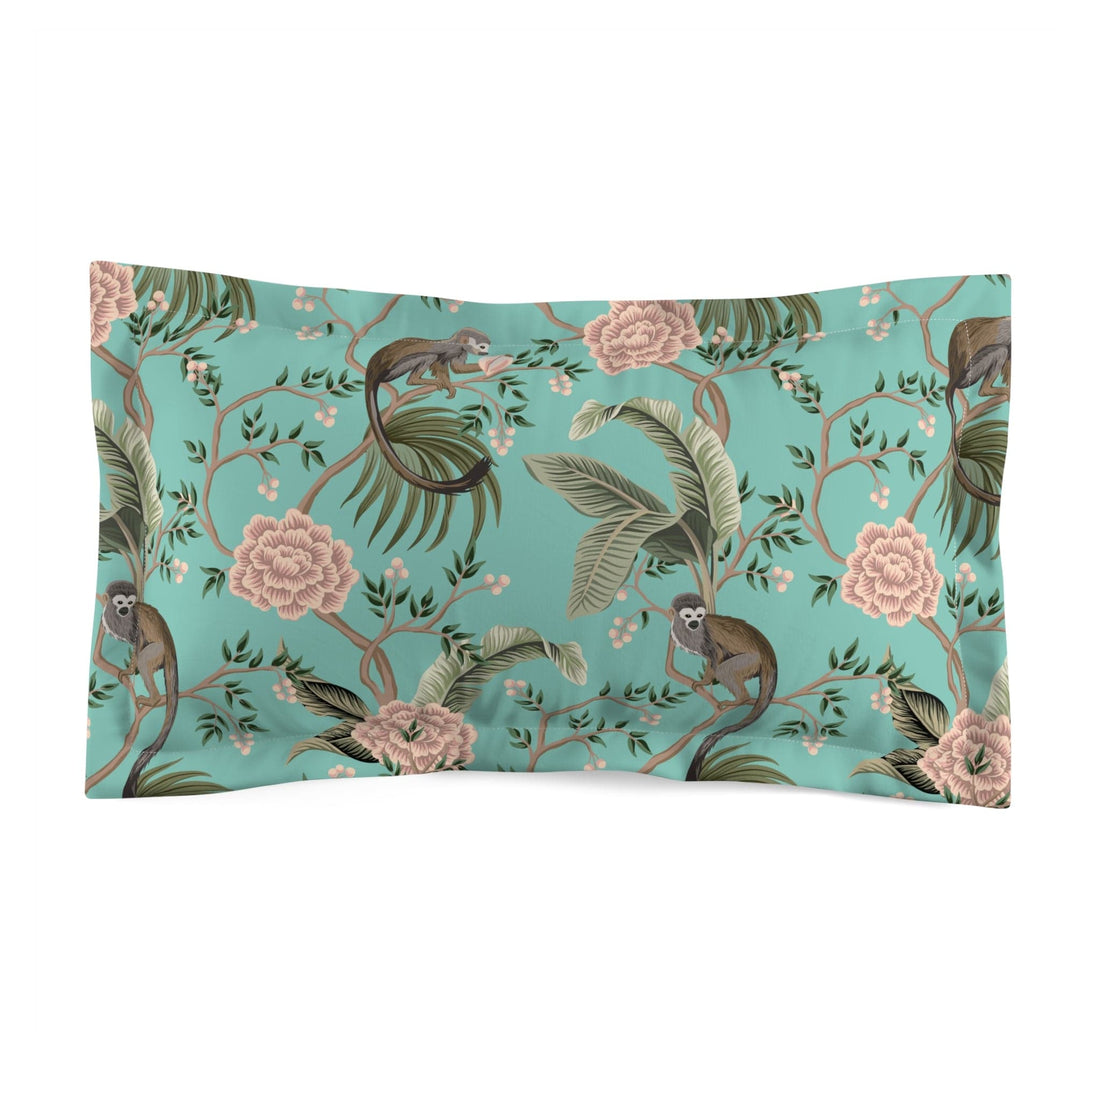 Kate McEnroe New York Chinoiserie Monkey Floral Pillow Sham, Teal Pink Botanical Toile BeddingPillow Shams18442100797502534805